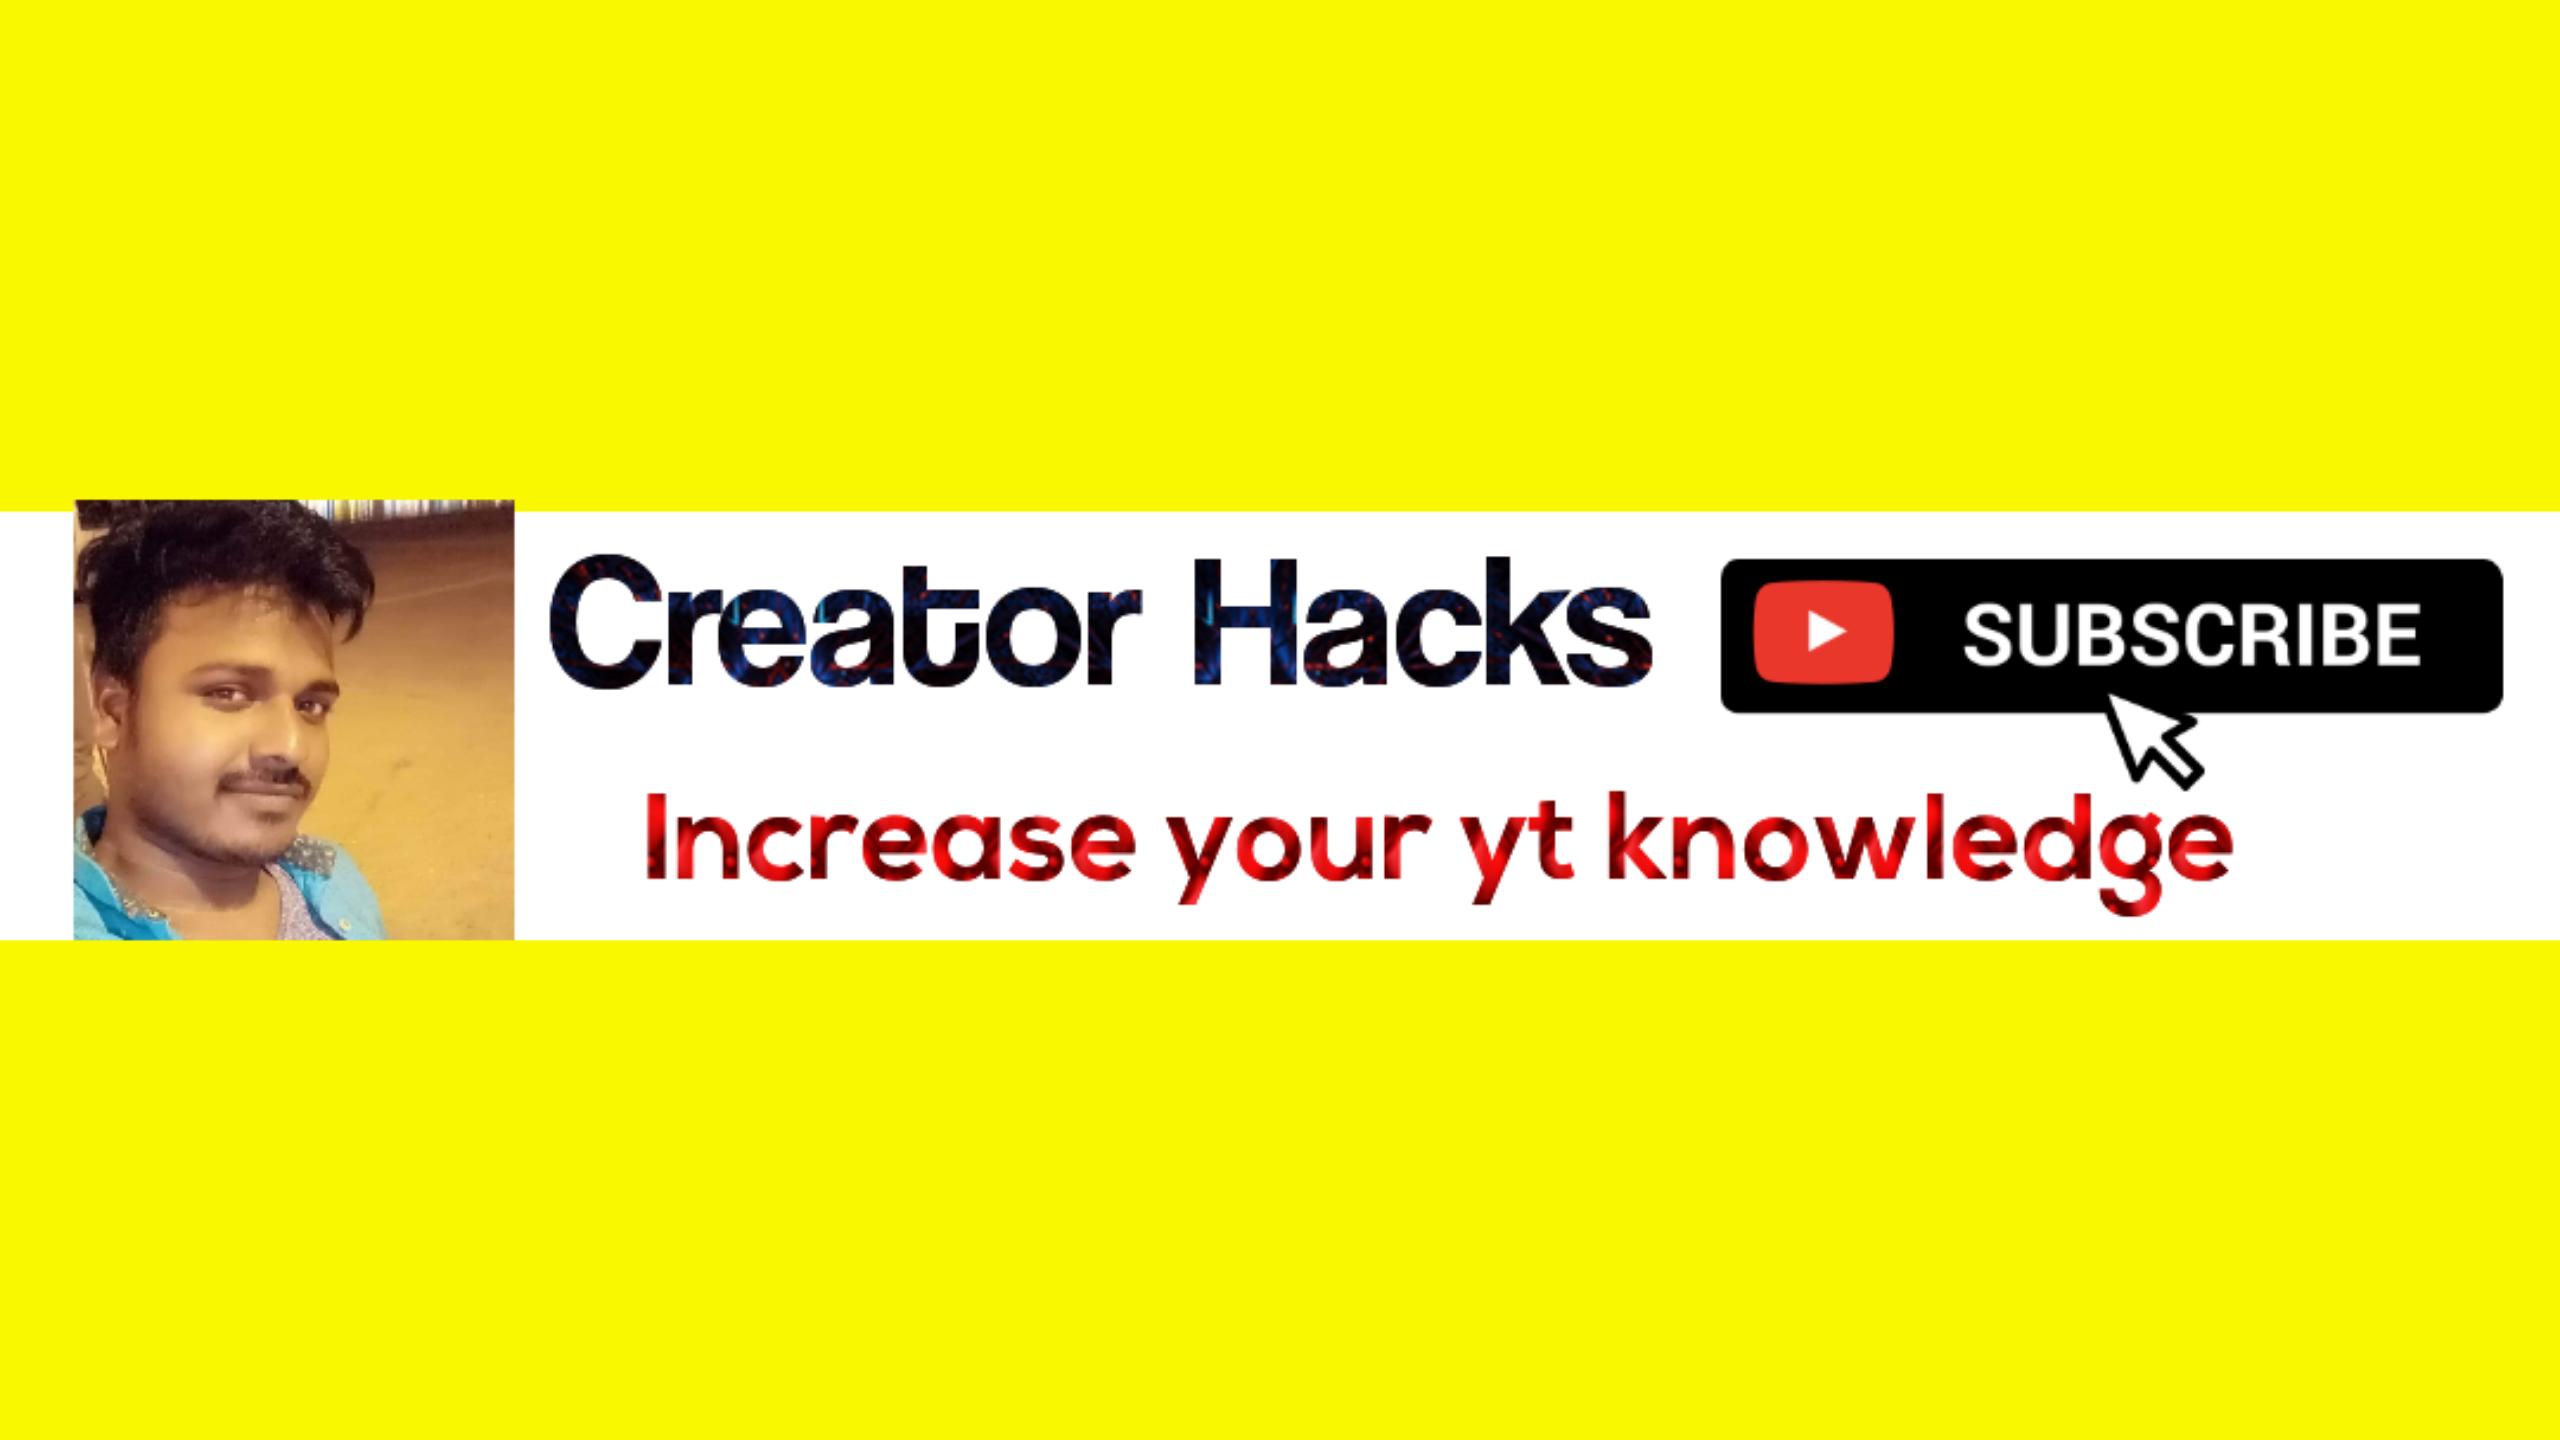 Creator Hacks